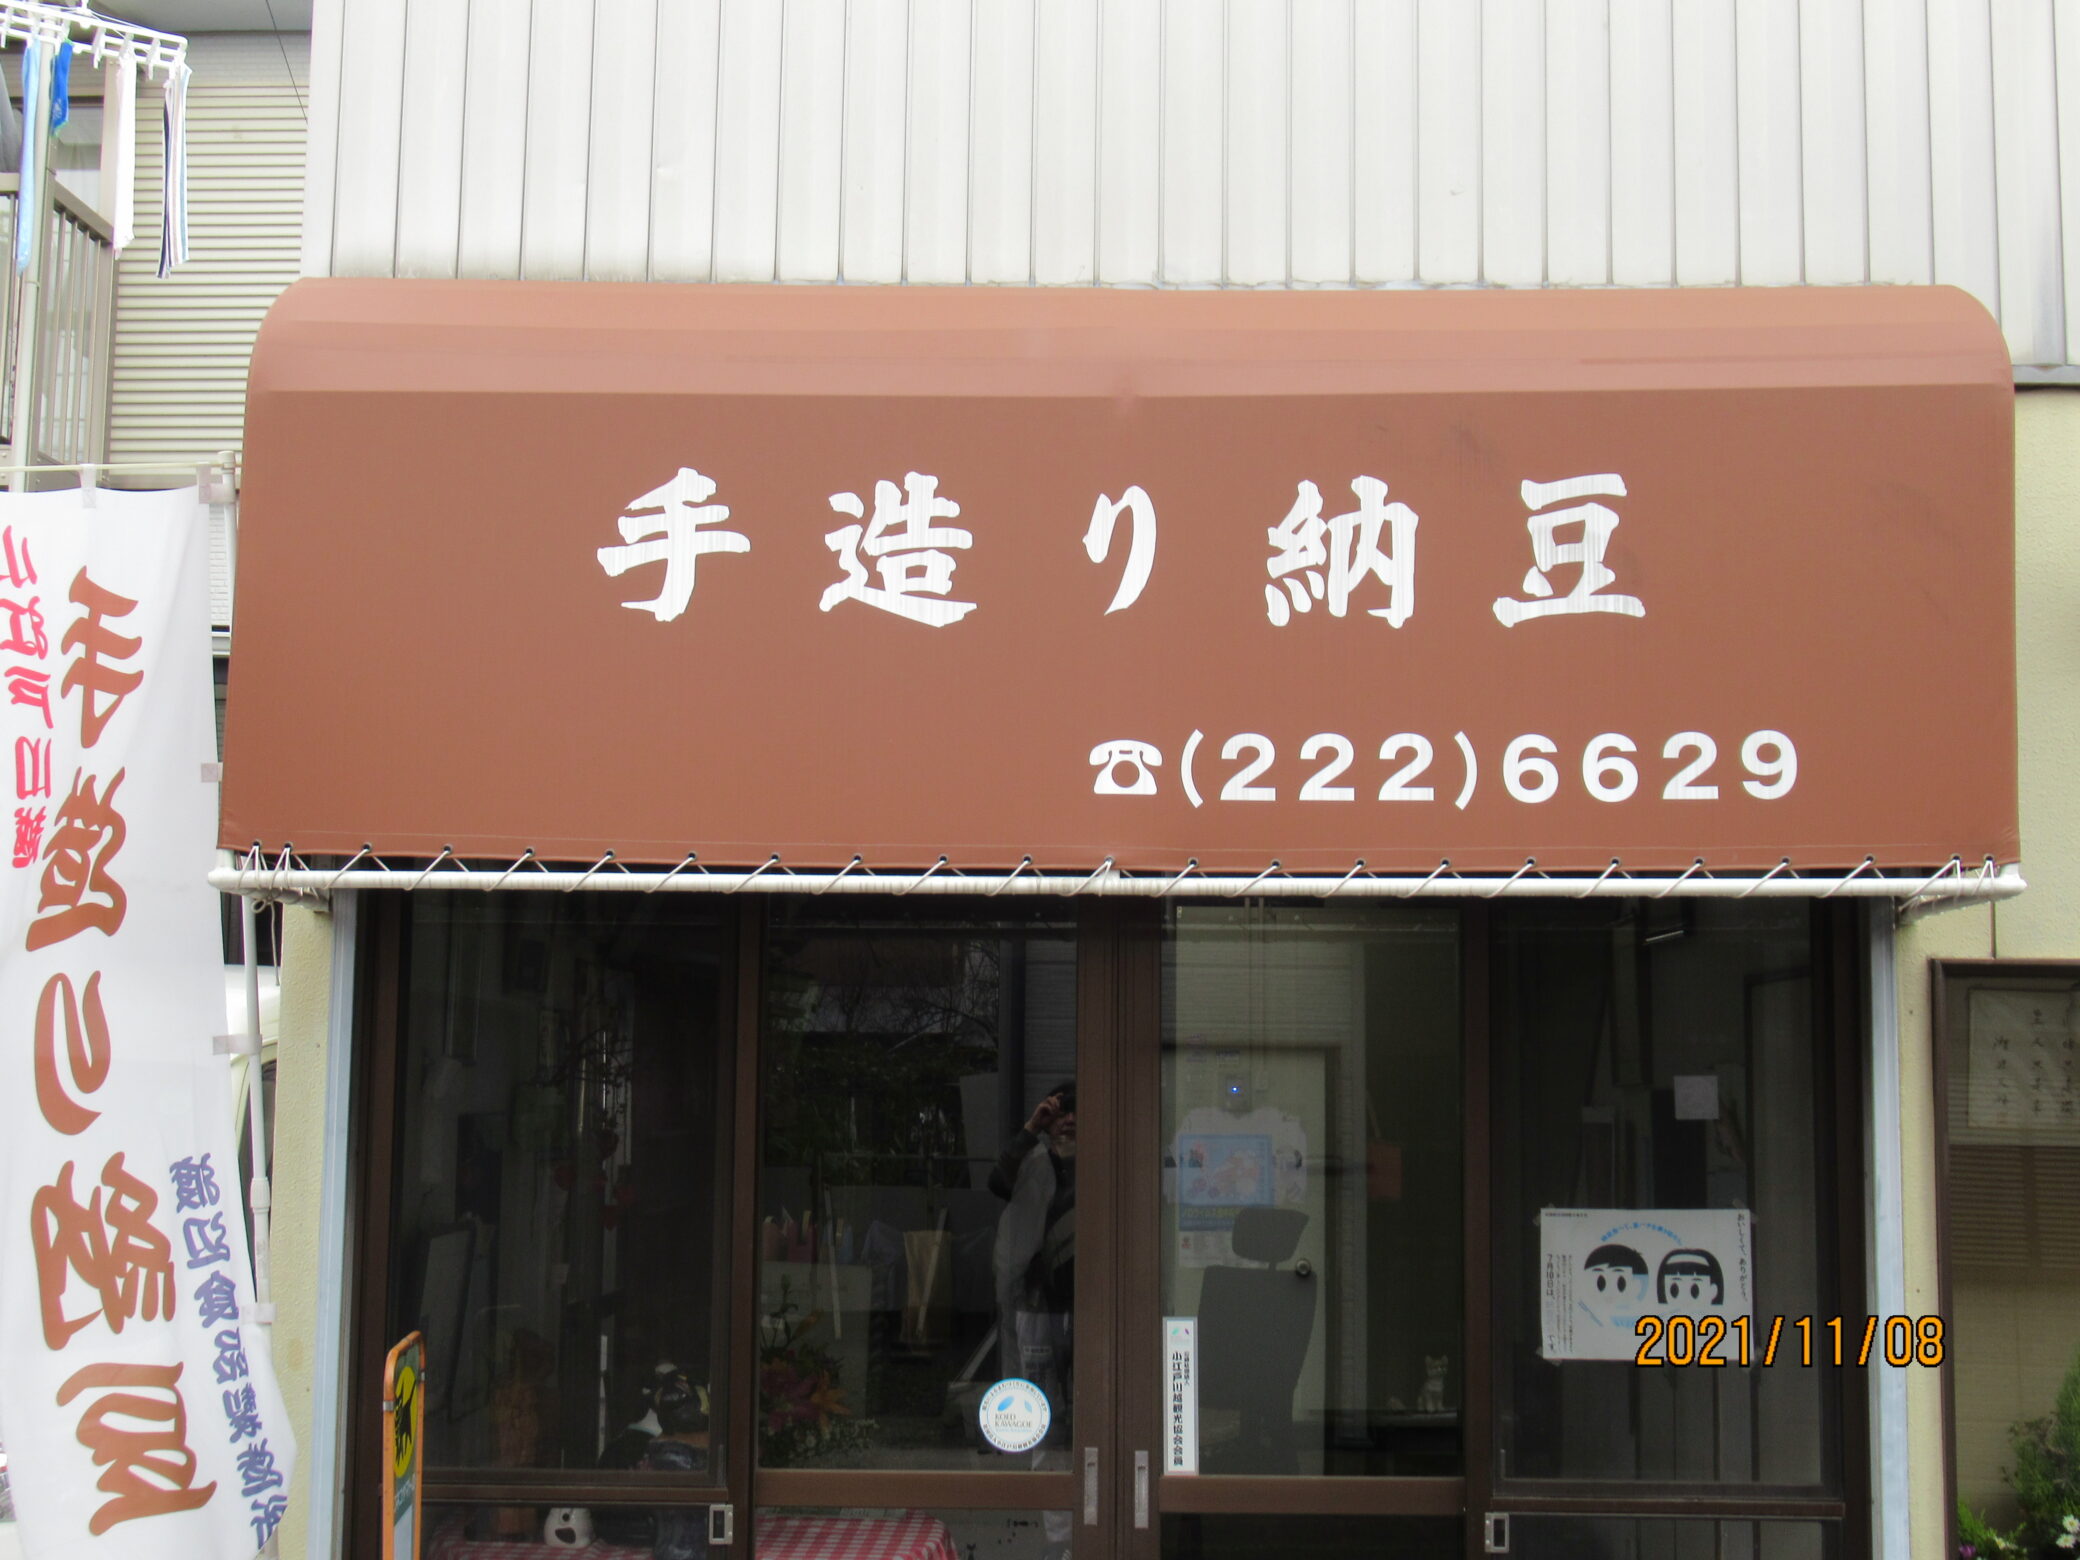 Watanabe Food Factory